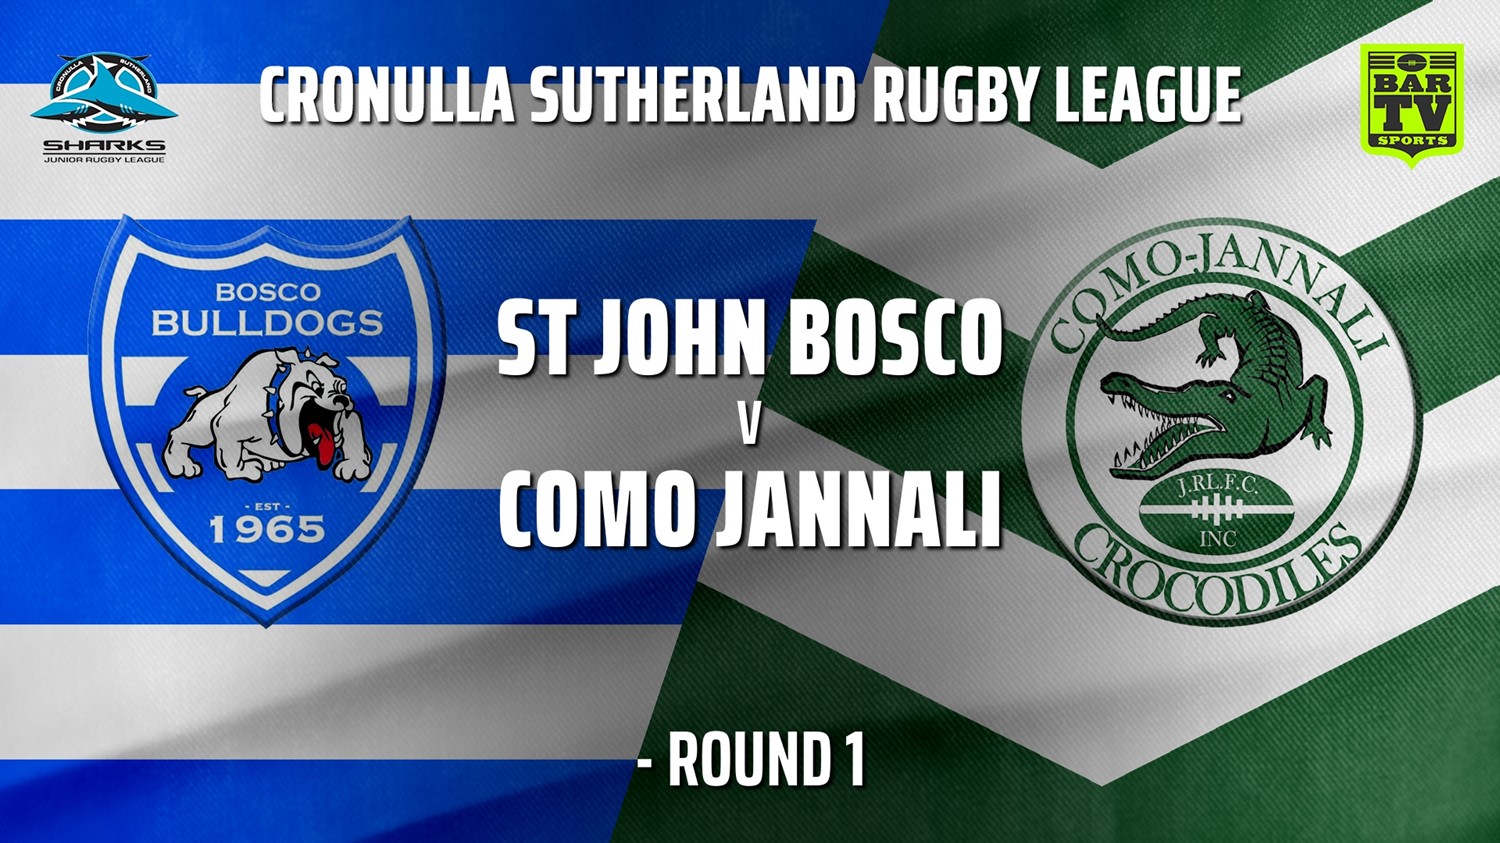 210501-Cronulla JRL Under 12 GOLD -  Round 1 - St John Bosco Bulldogs v Como Jannali Crocodiles Minigame Slate Image